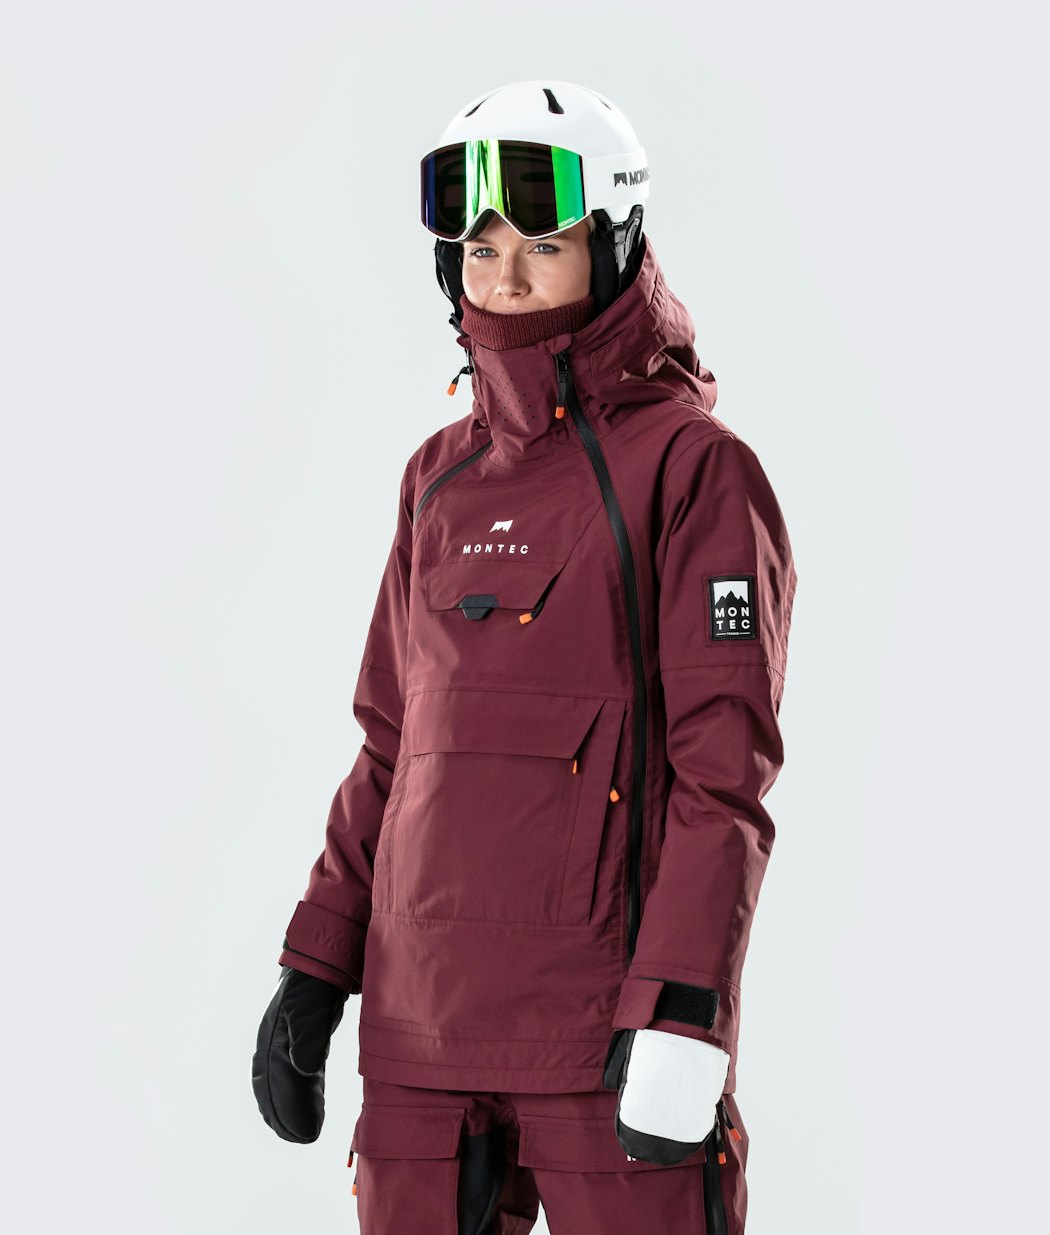 Montec Doom W 2020 Veste de Ski Femme Burgundy